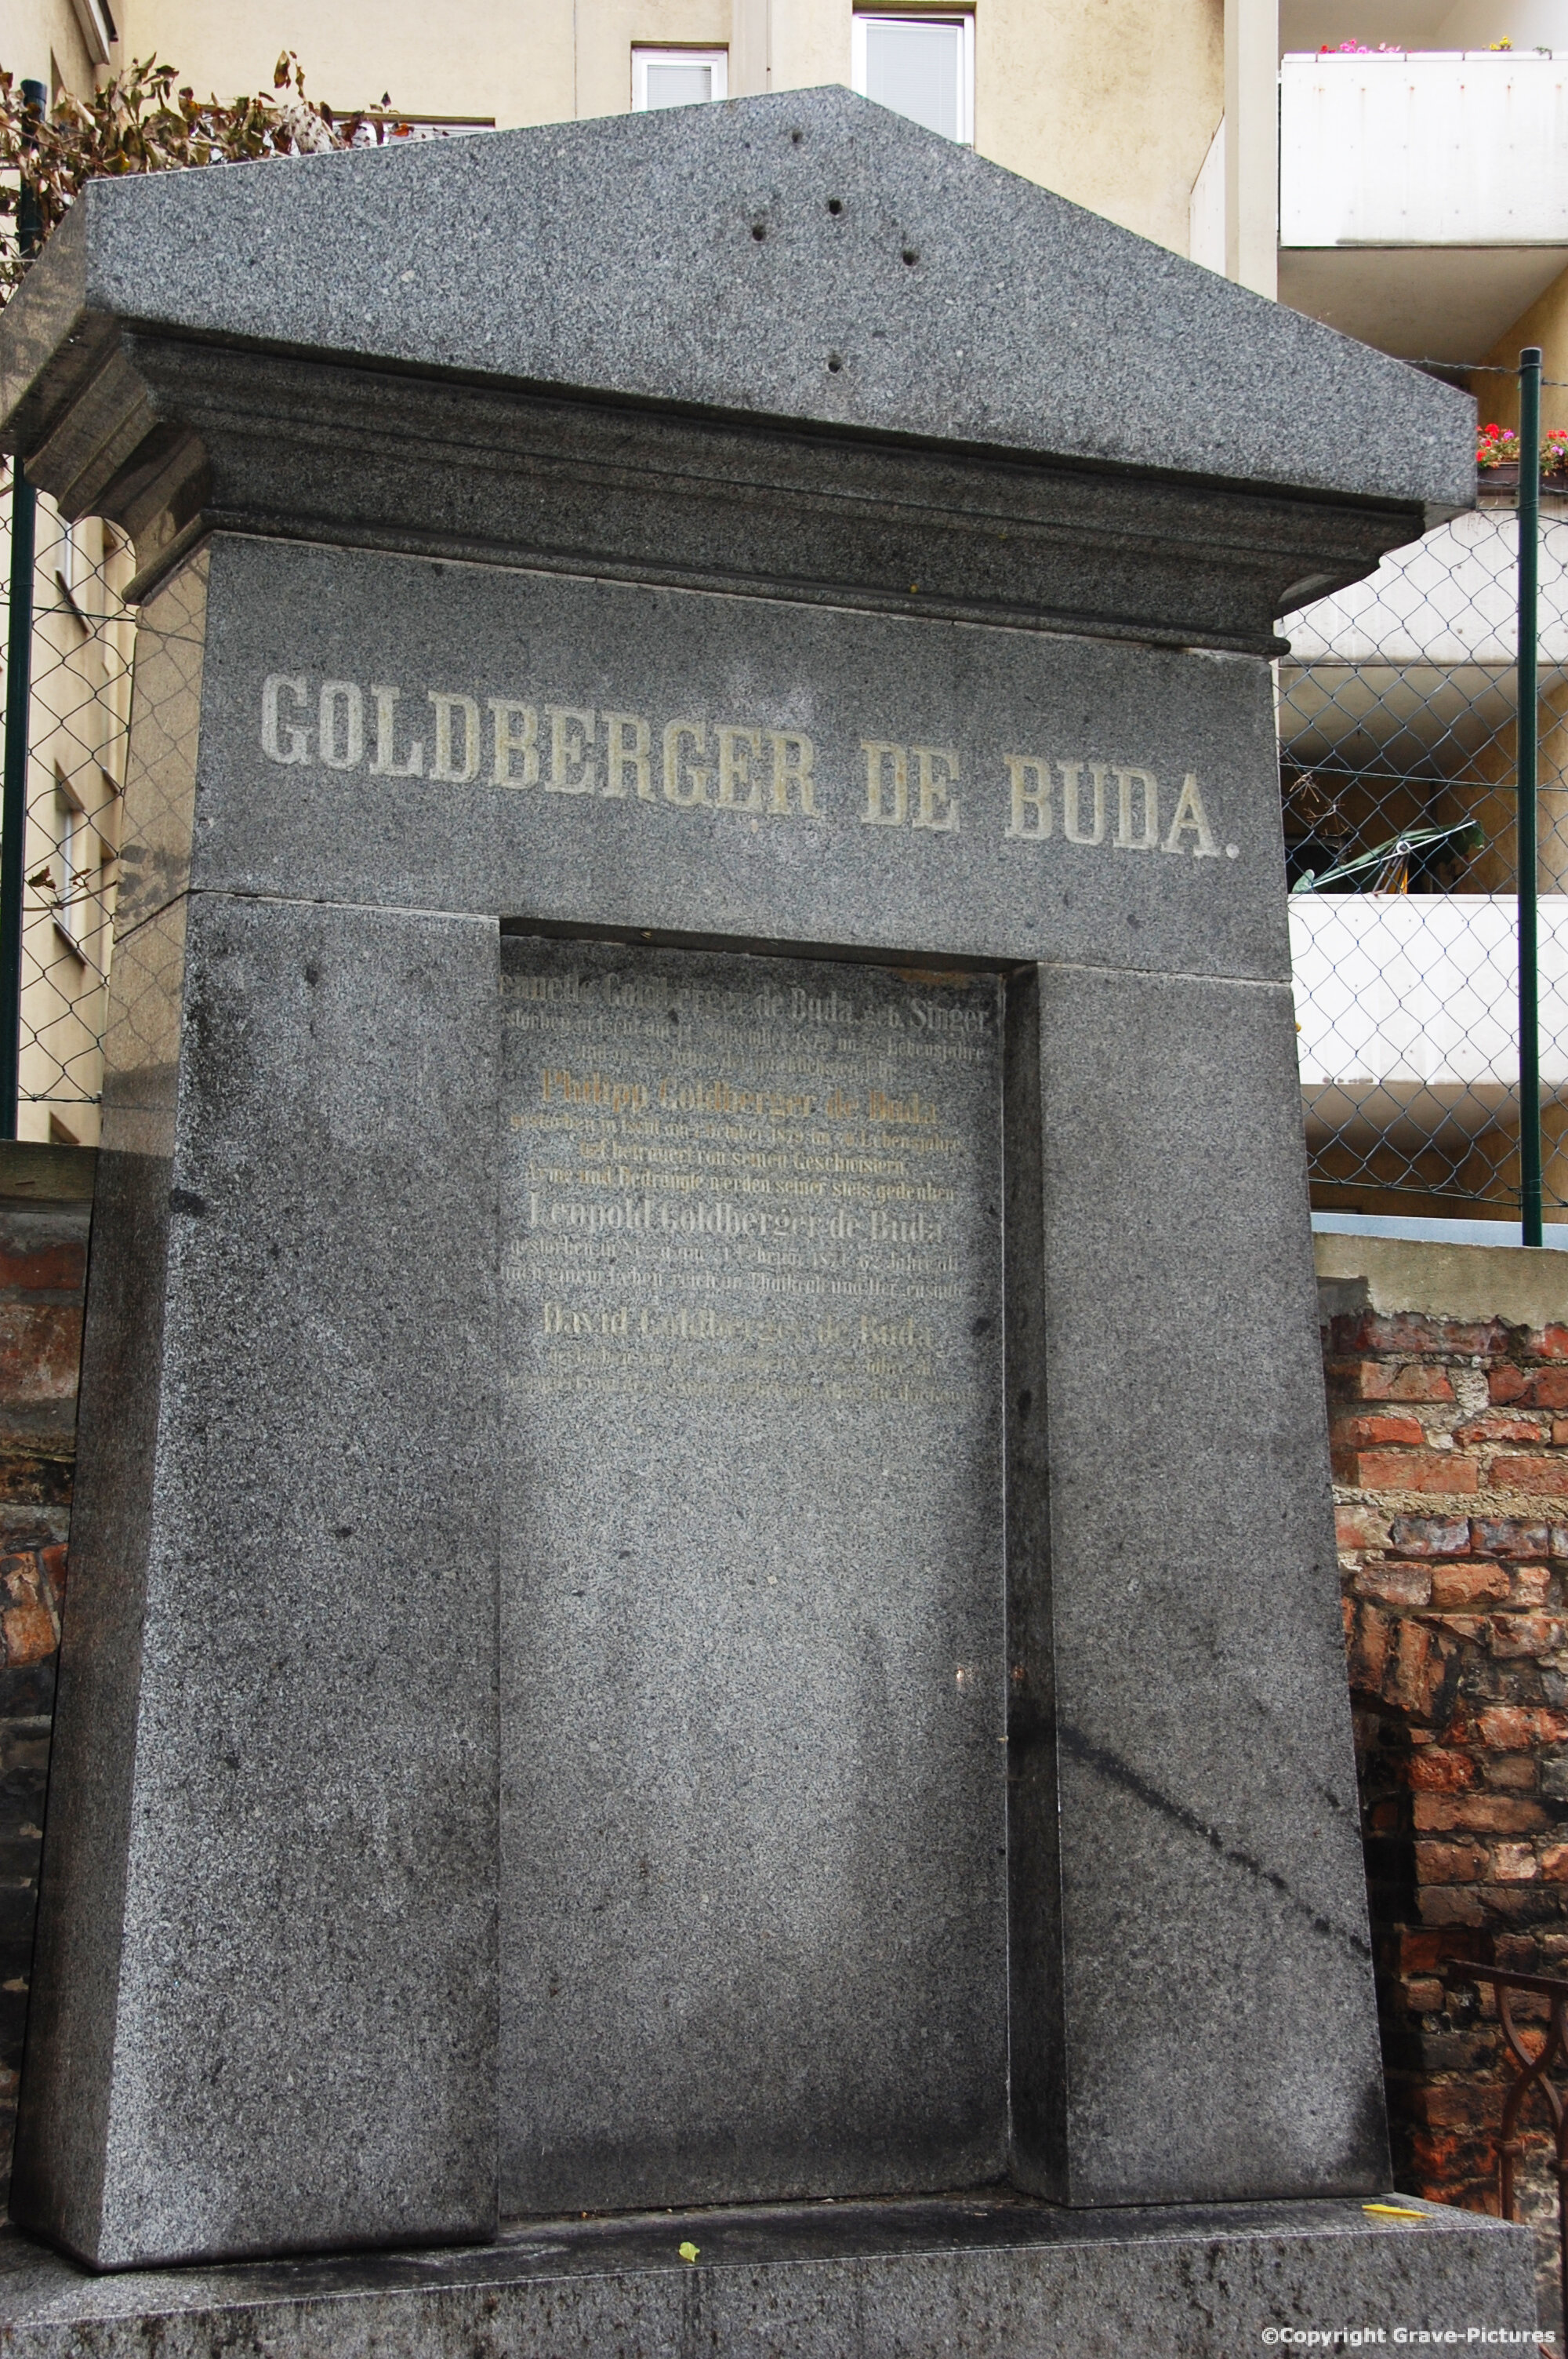 Goldberger de Buda Philipp